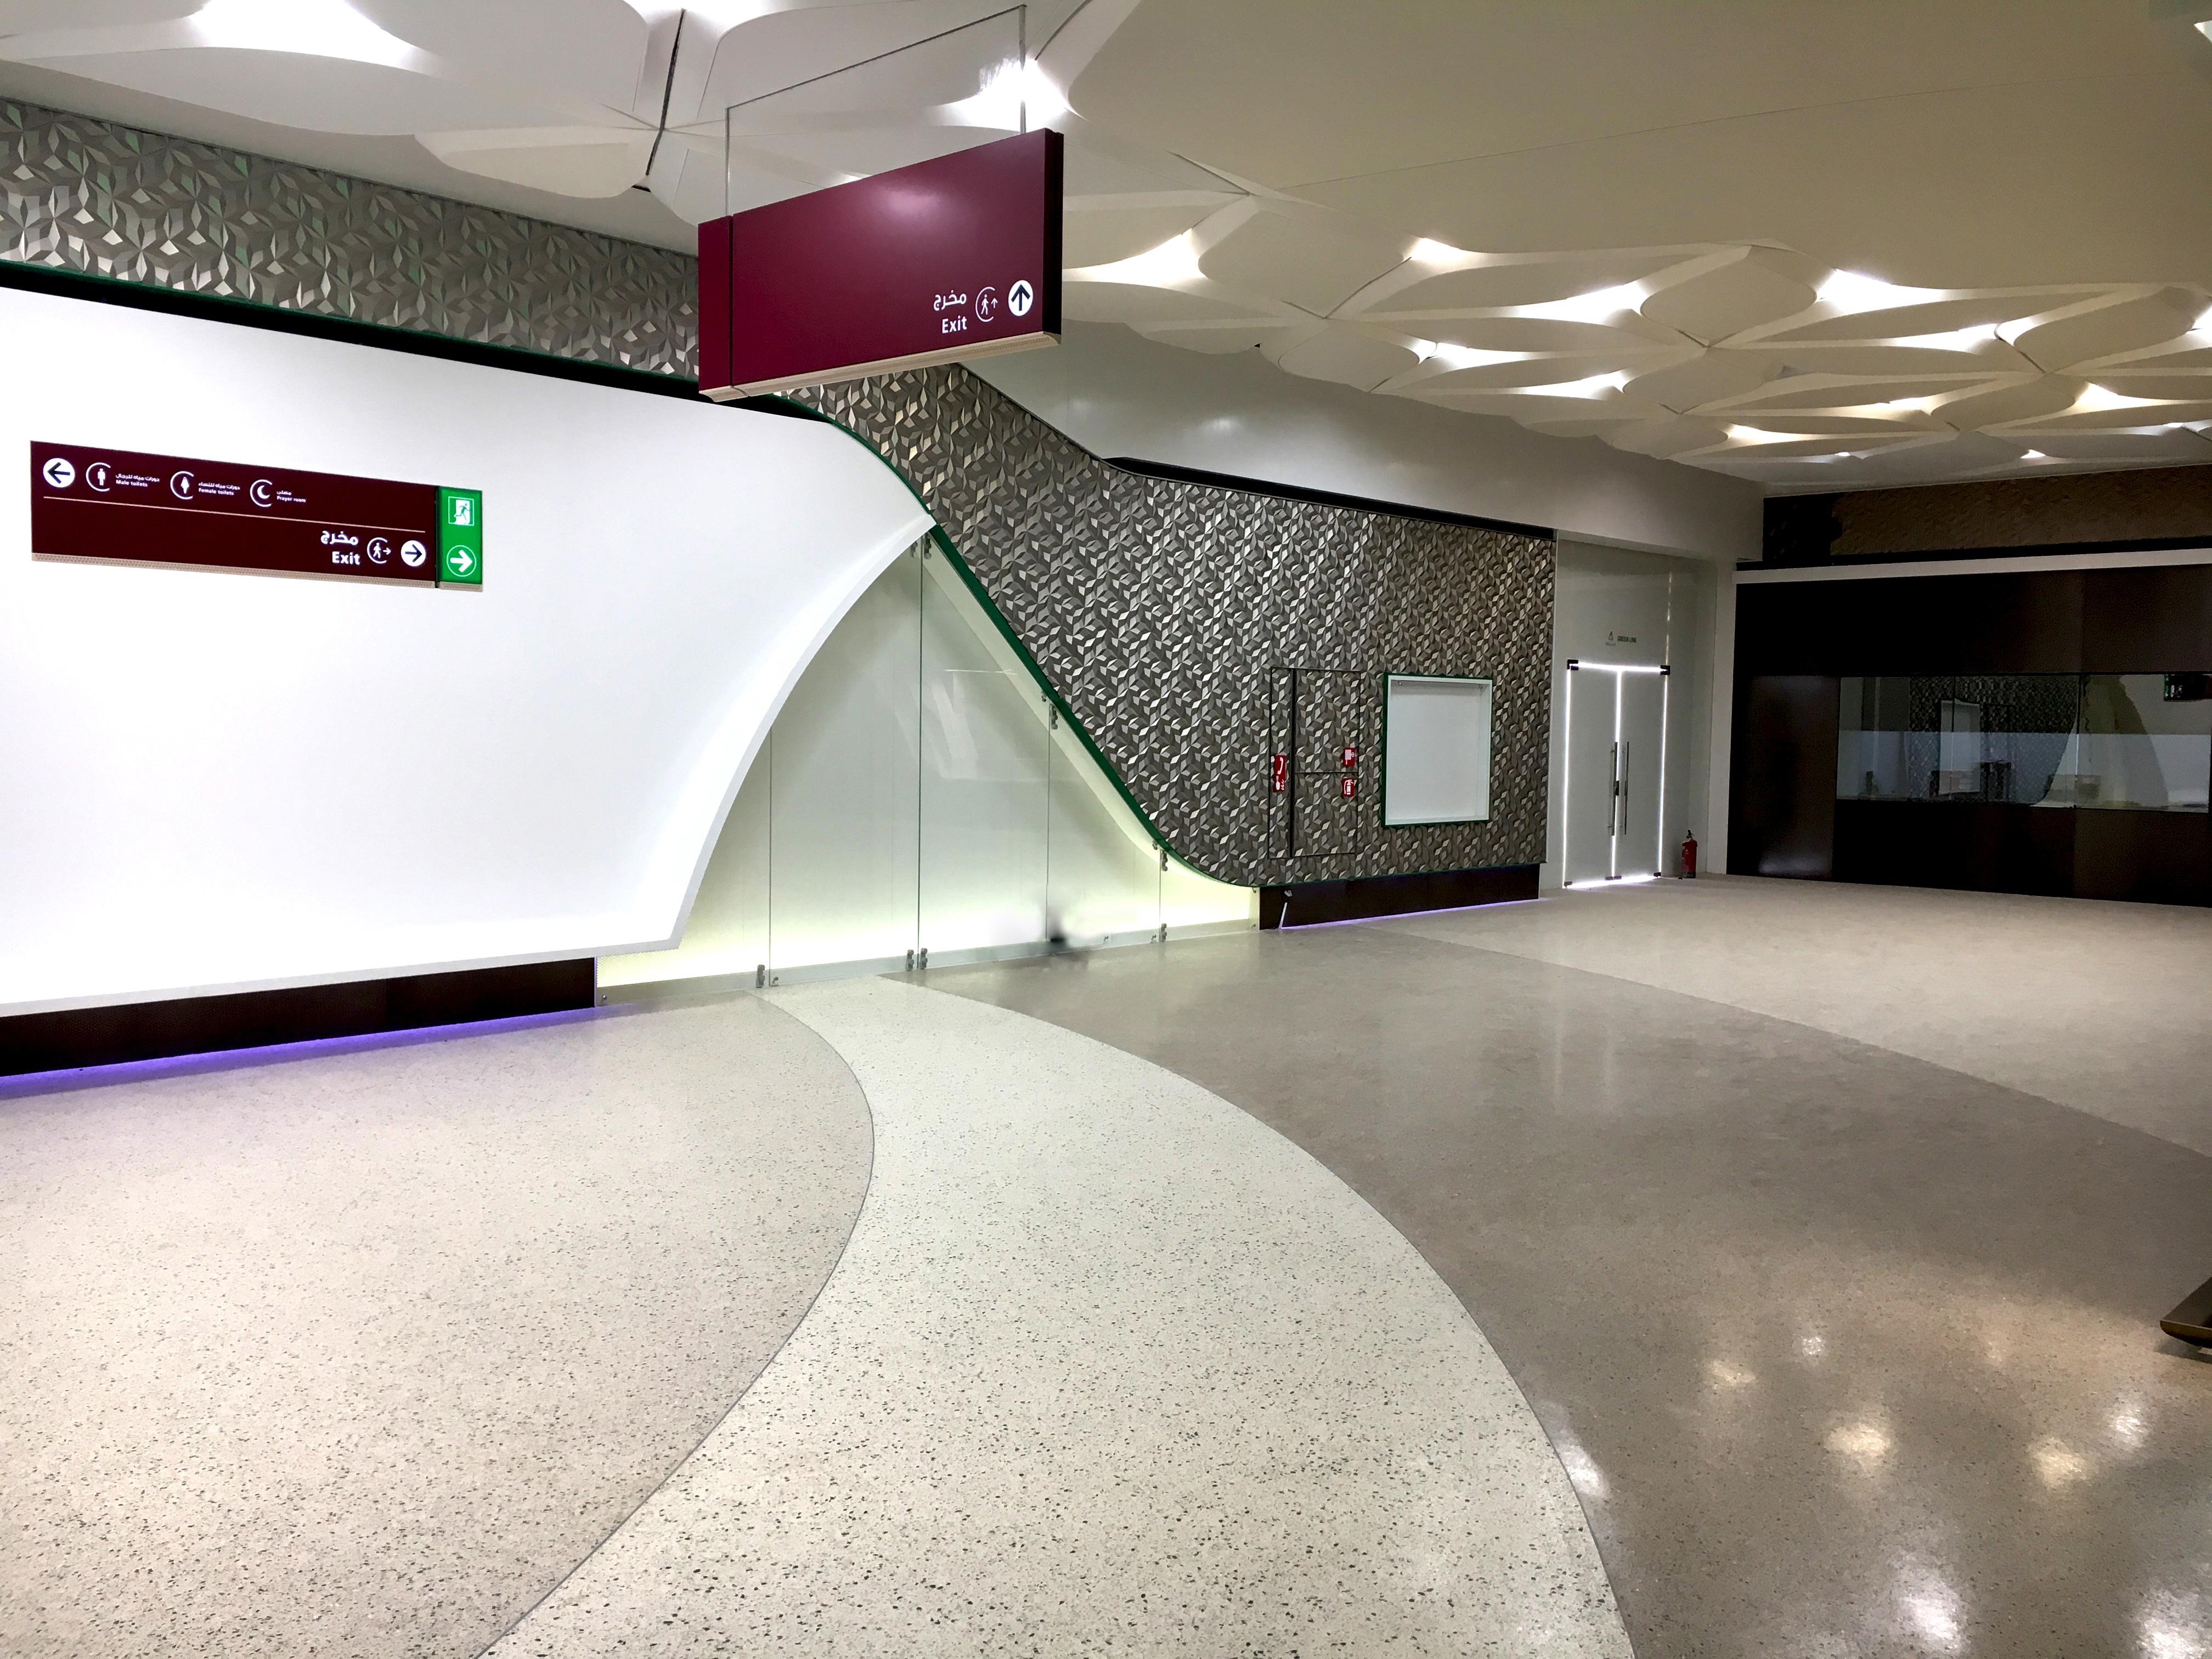 Mapei Doha Metro Construction